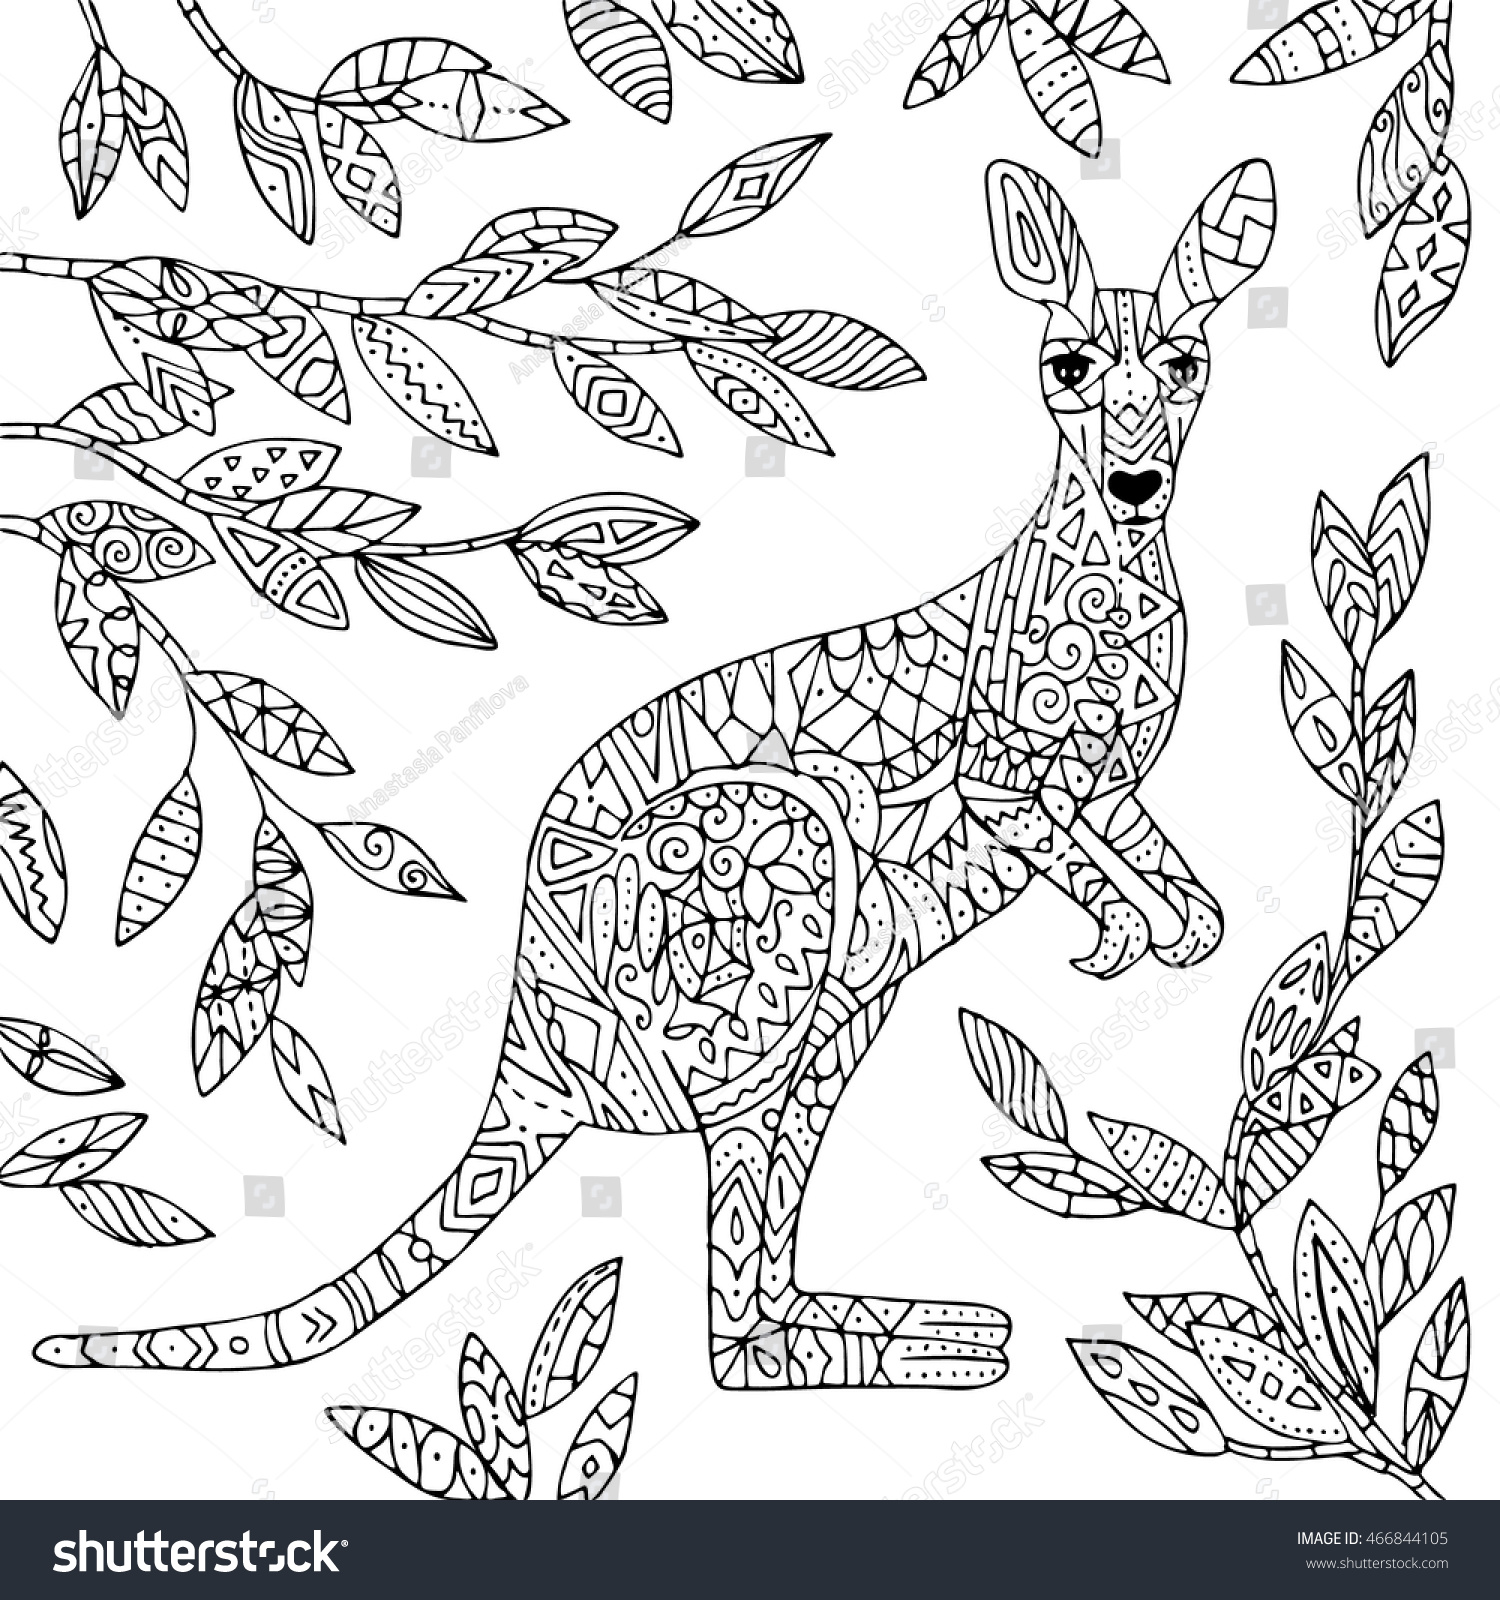 Vector kangaroo illustration adult coloring page stock vector royalty free